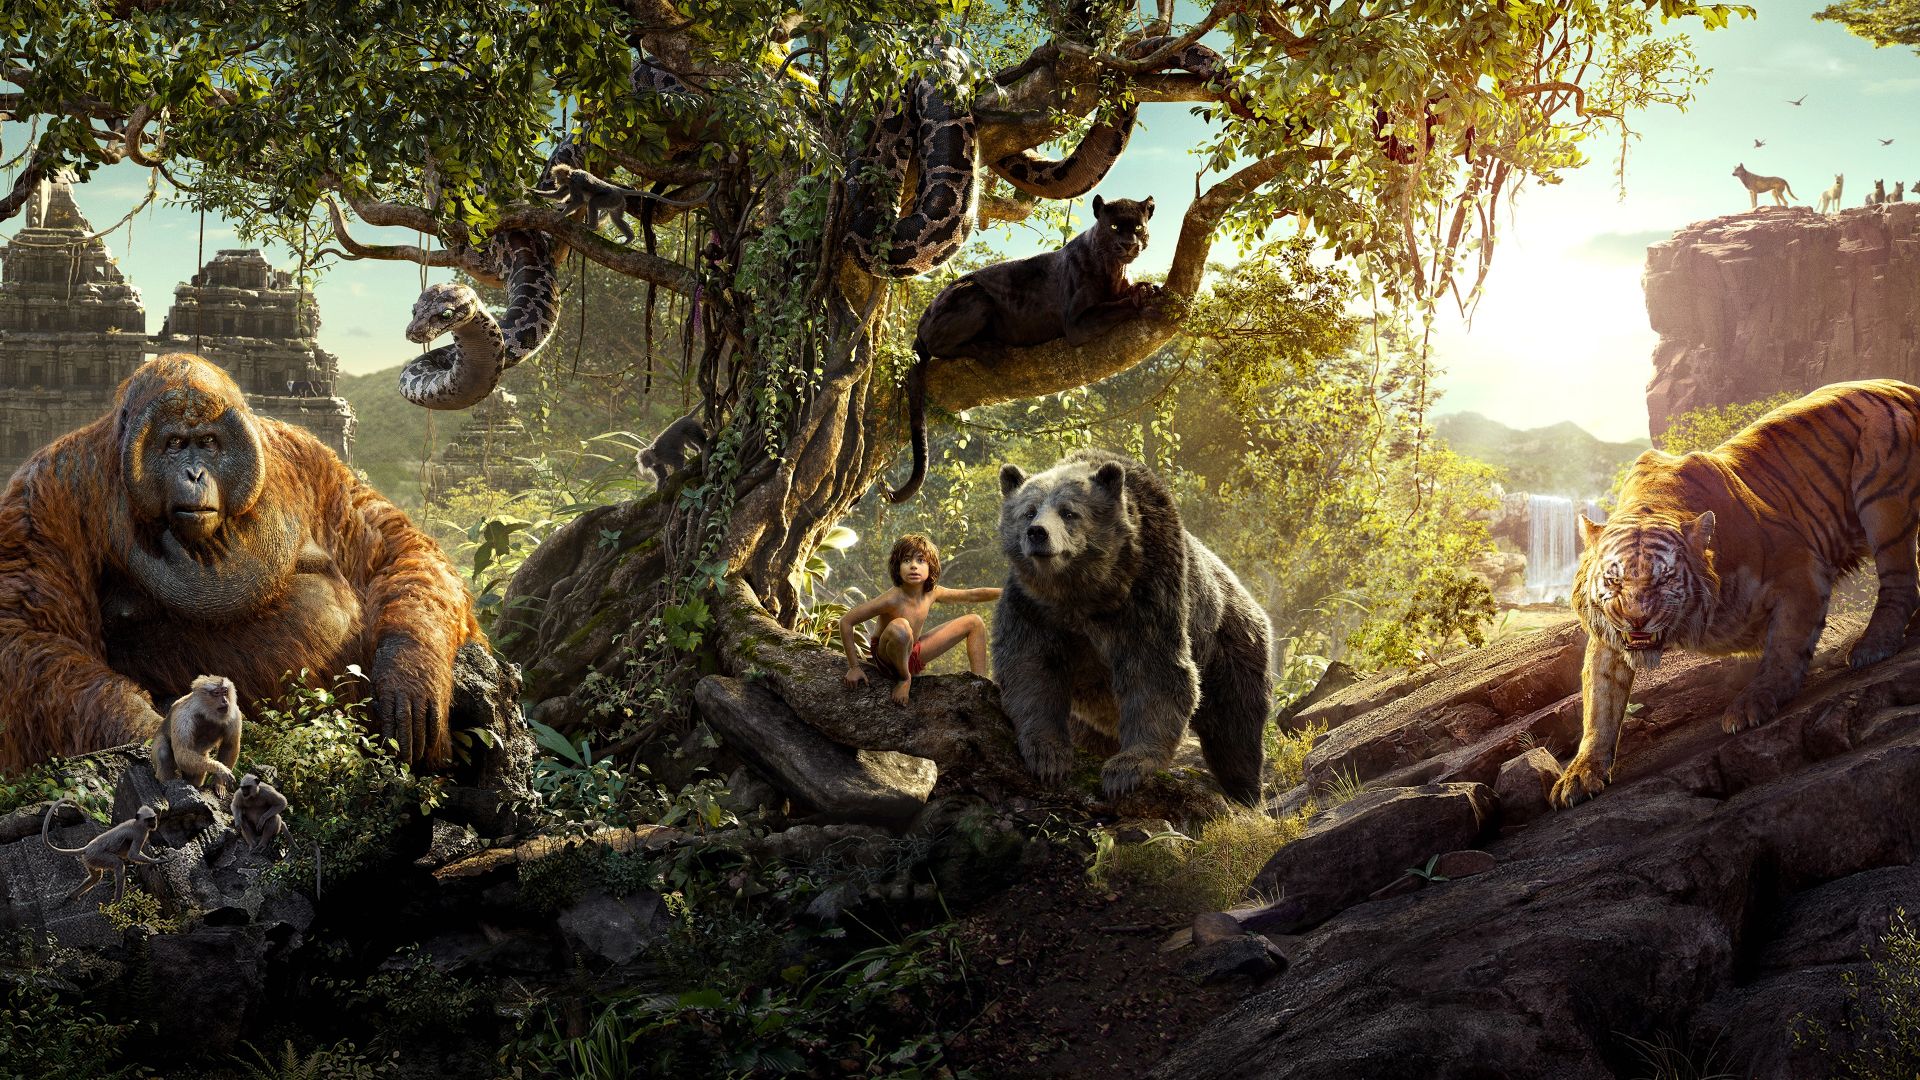 Книга джунглей, Лучшие фильмы, Маугли, Багира, The Jungle Book, Best Movies, Mowgli, Bagheera (horizontal)